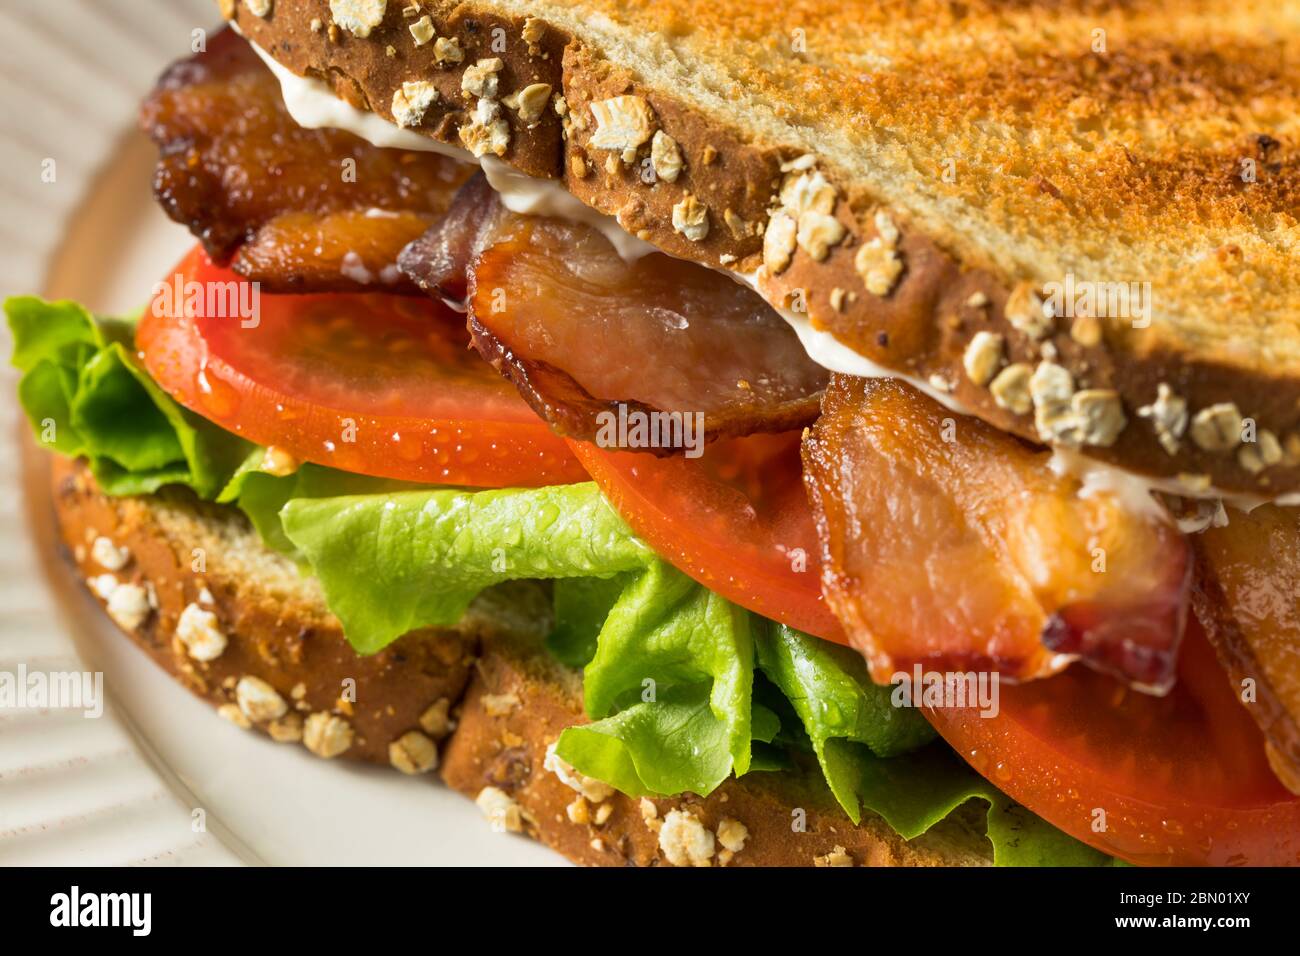 Homemade Bacon Lettuce Tomato BLT Sandwich Ready to Eat Stock Photo